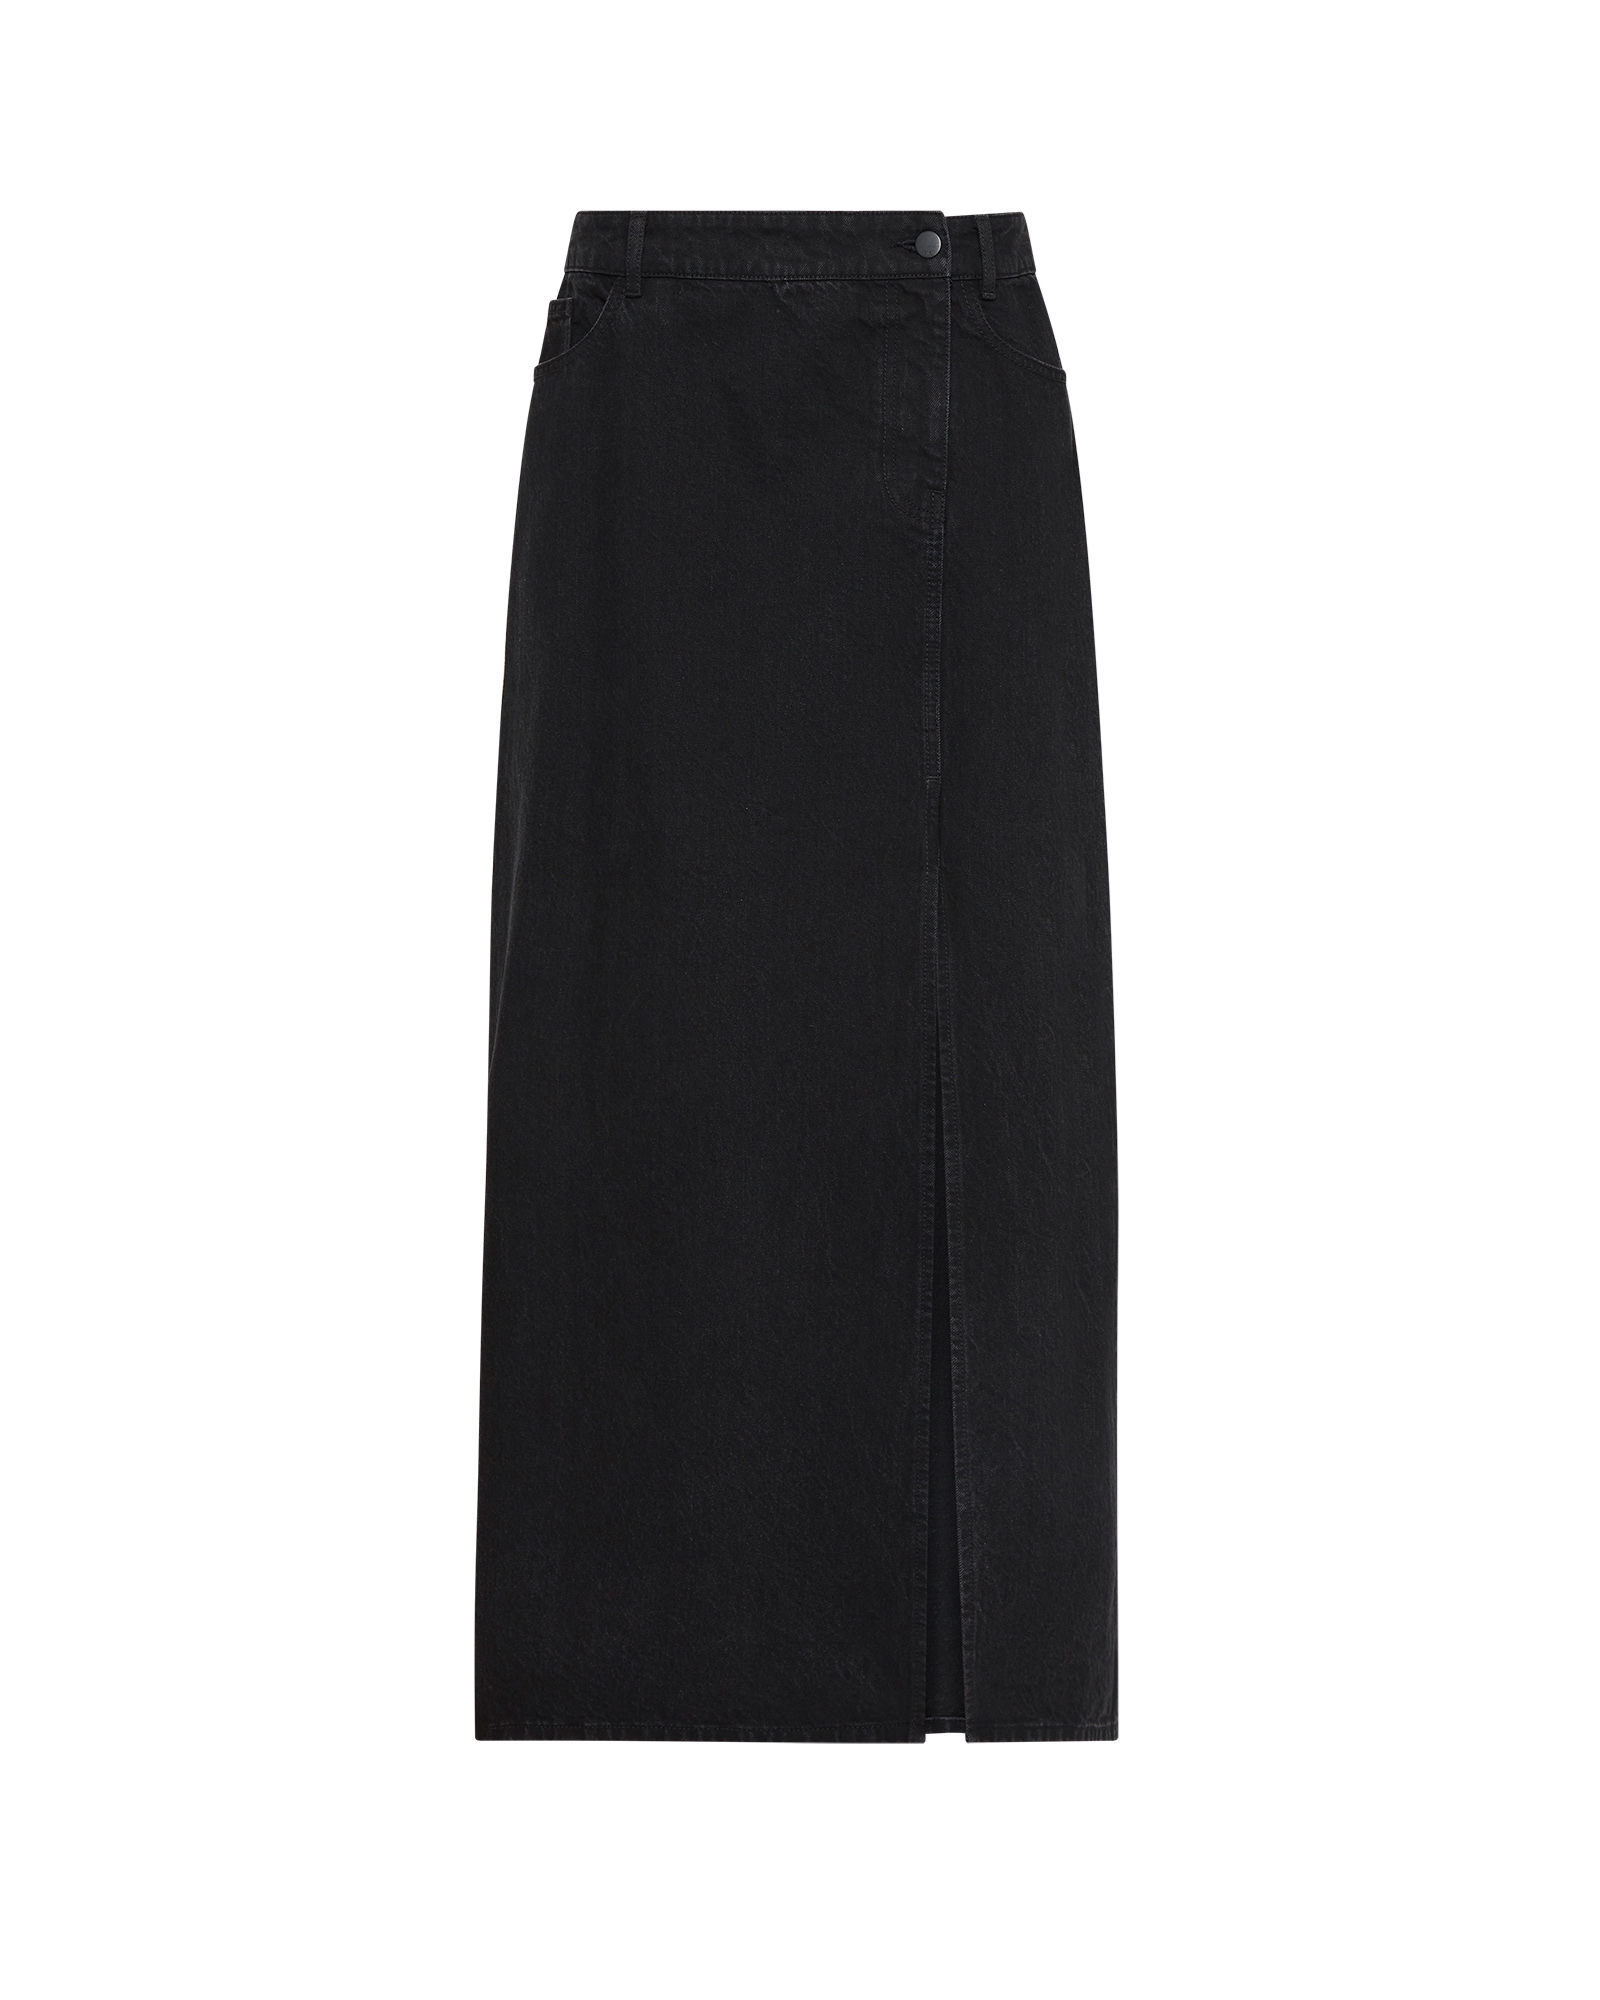 Black Denim Maxi Skirt | Buy Skirts Online - Cue